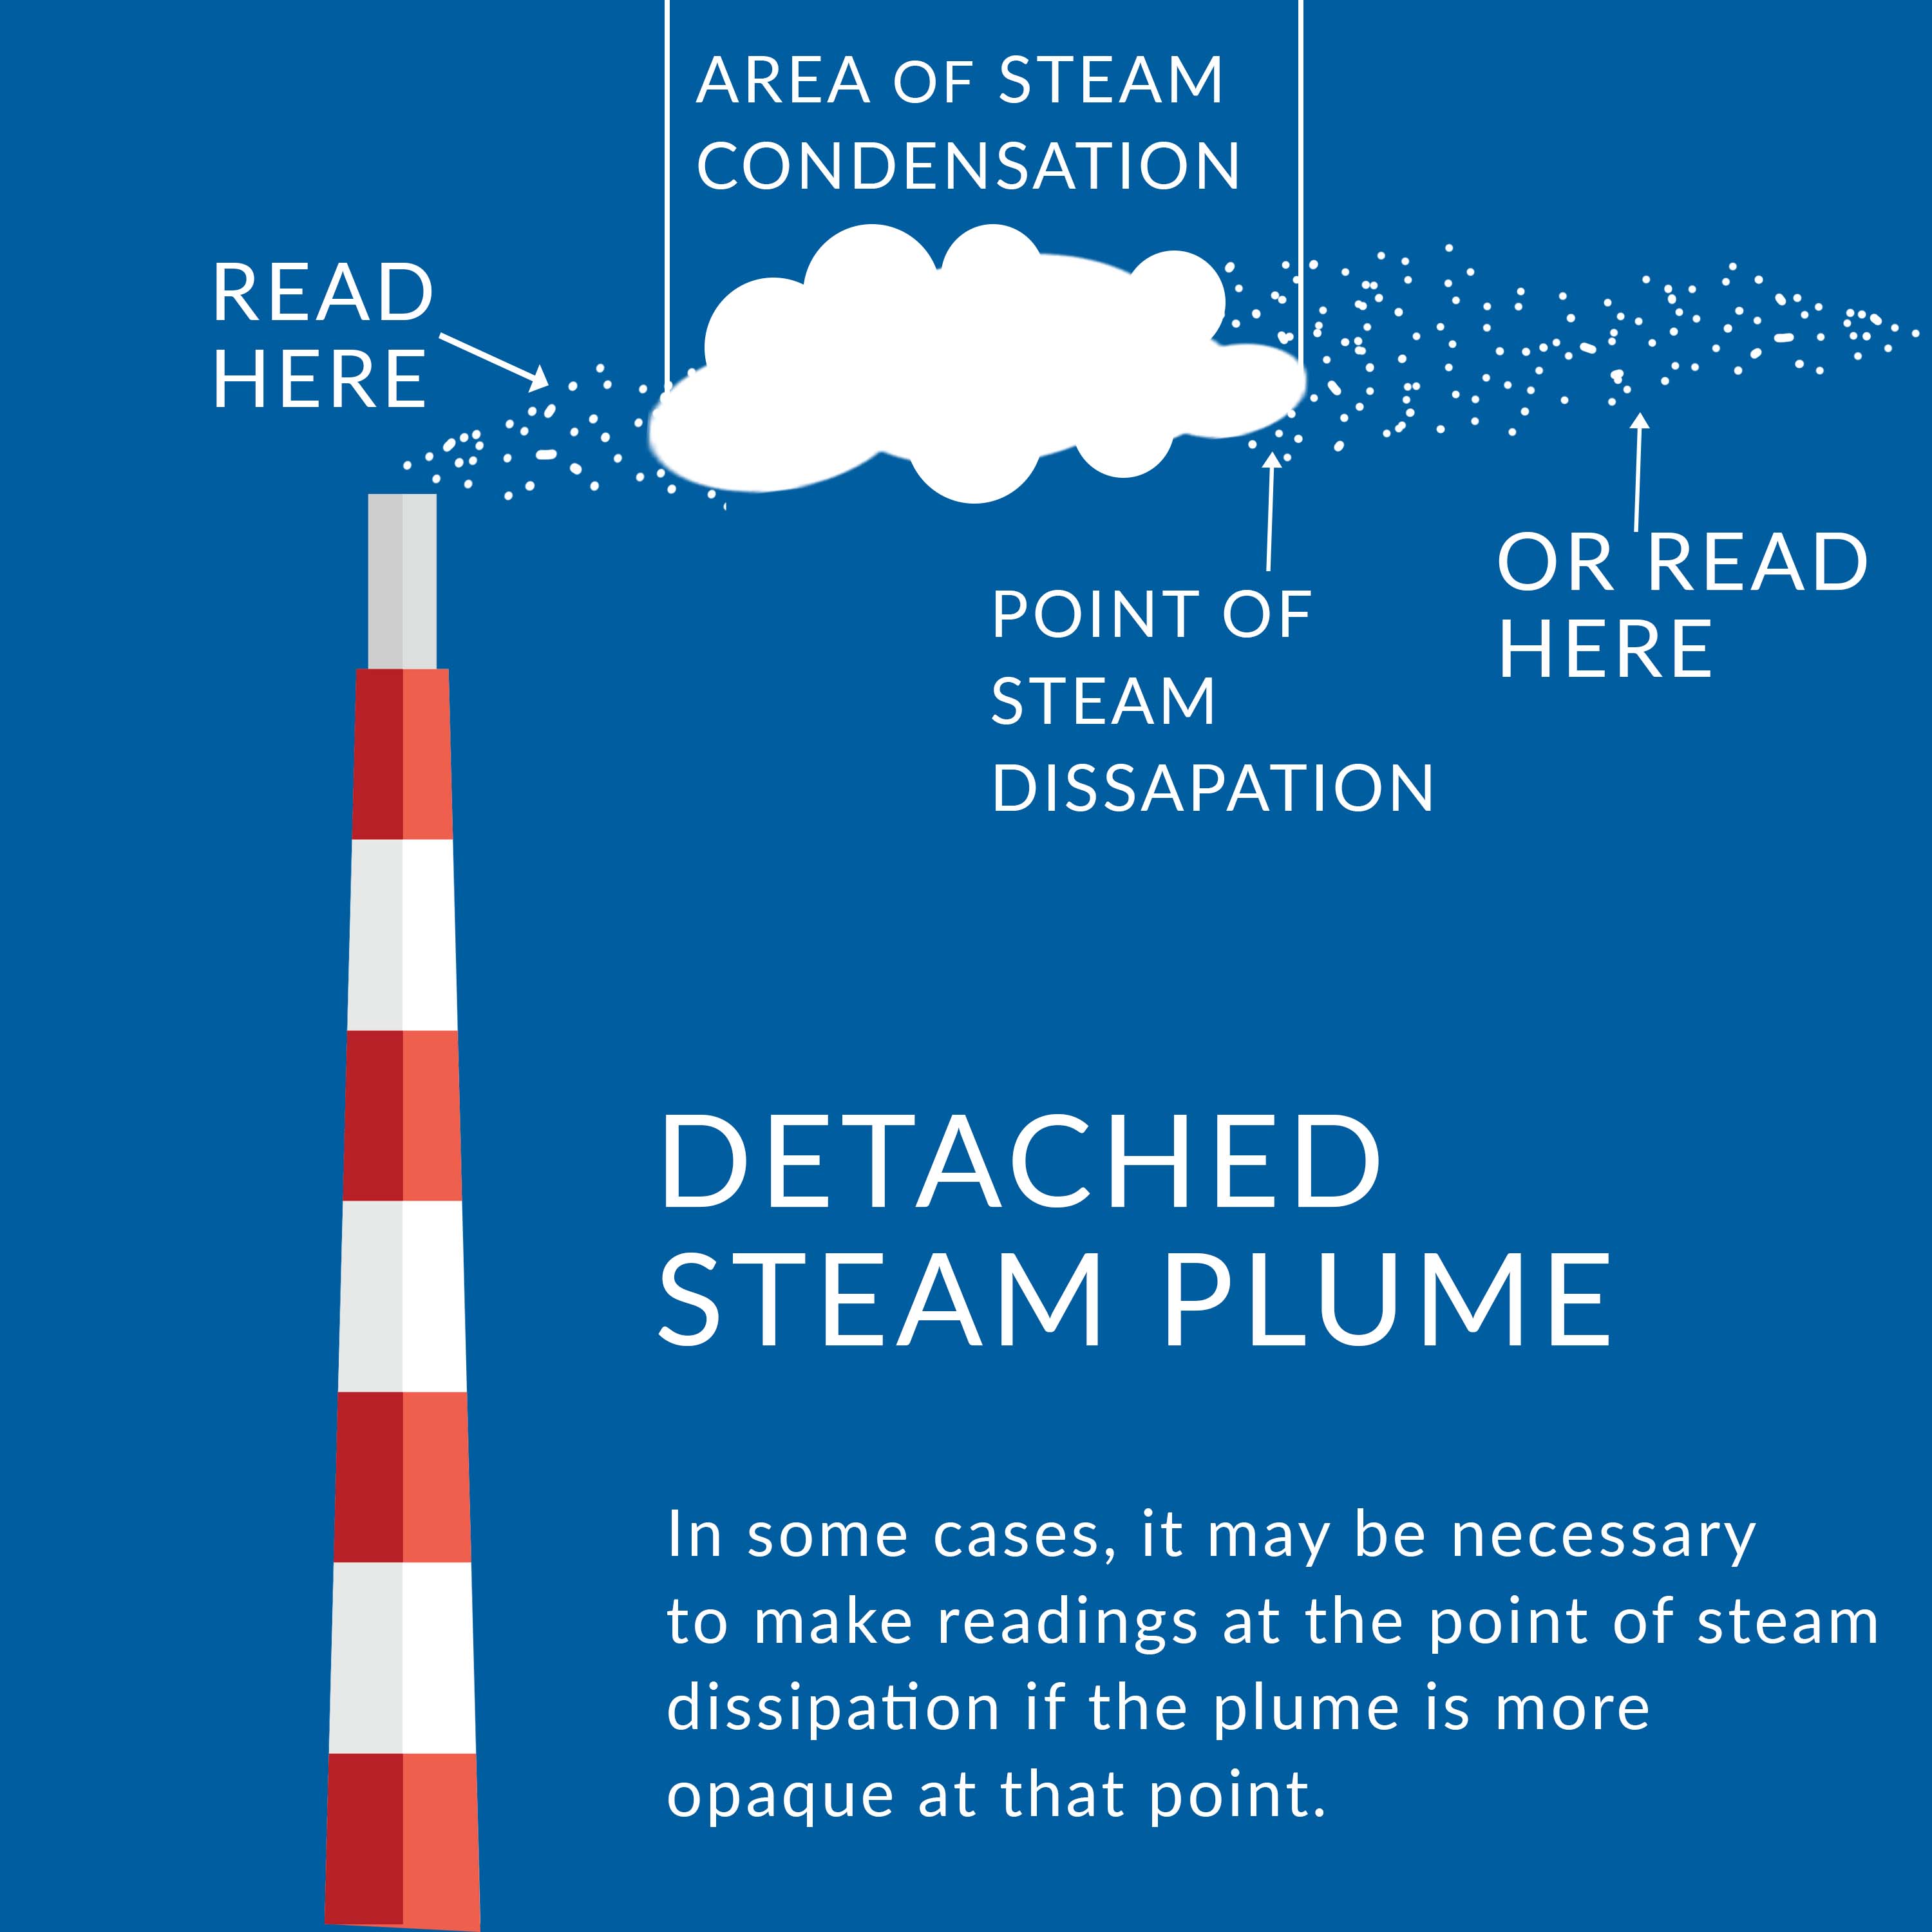 Detached steam plume